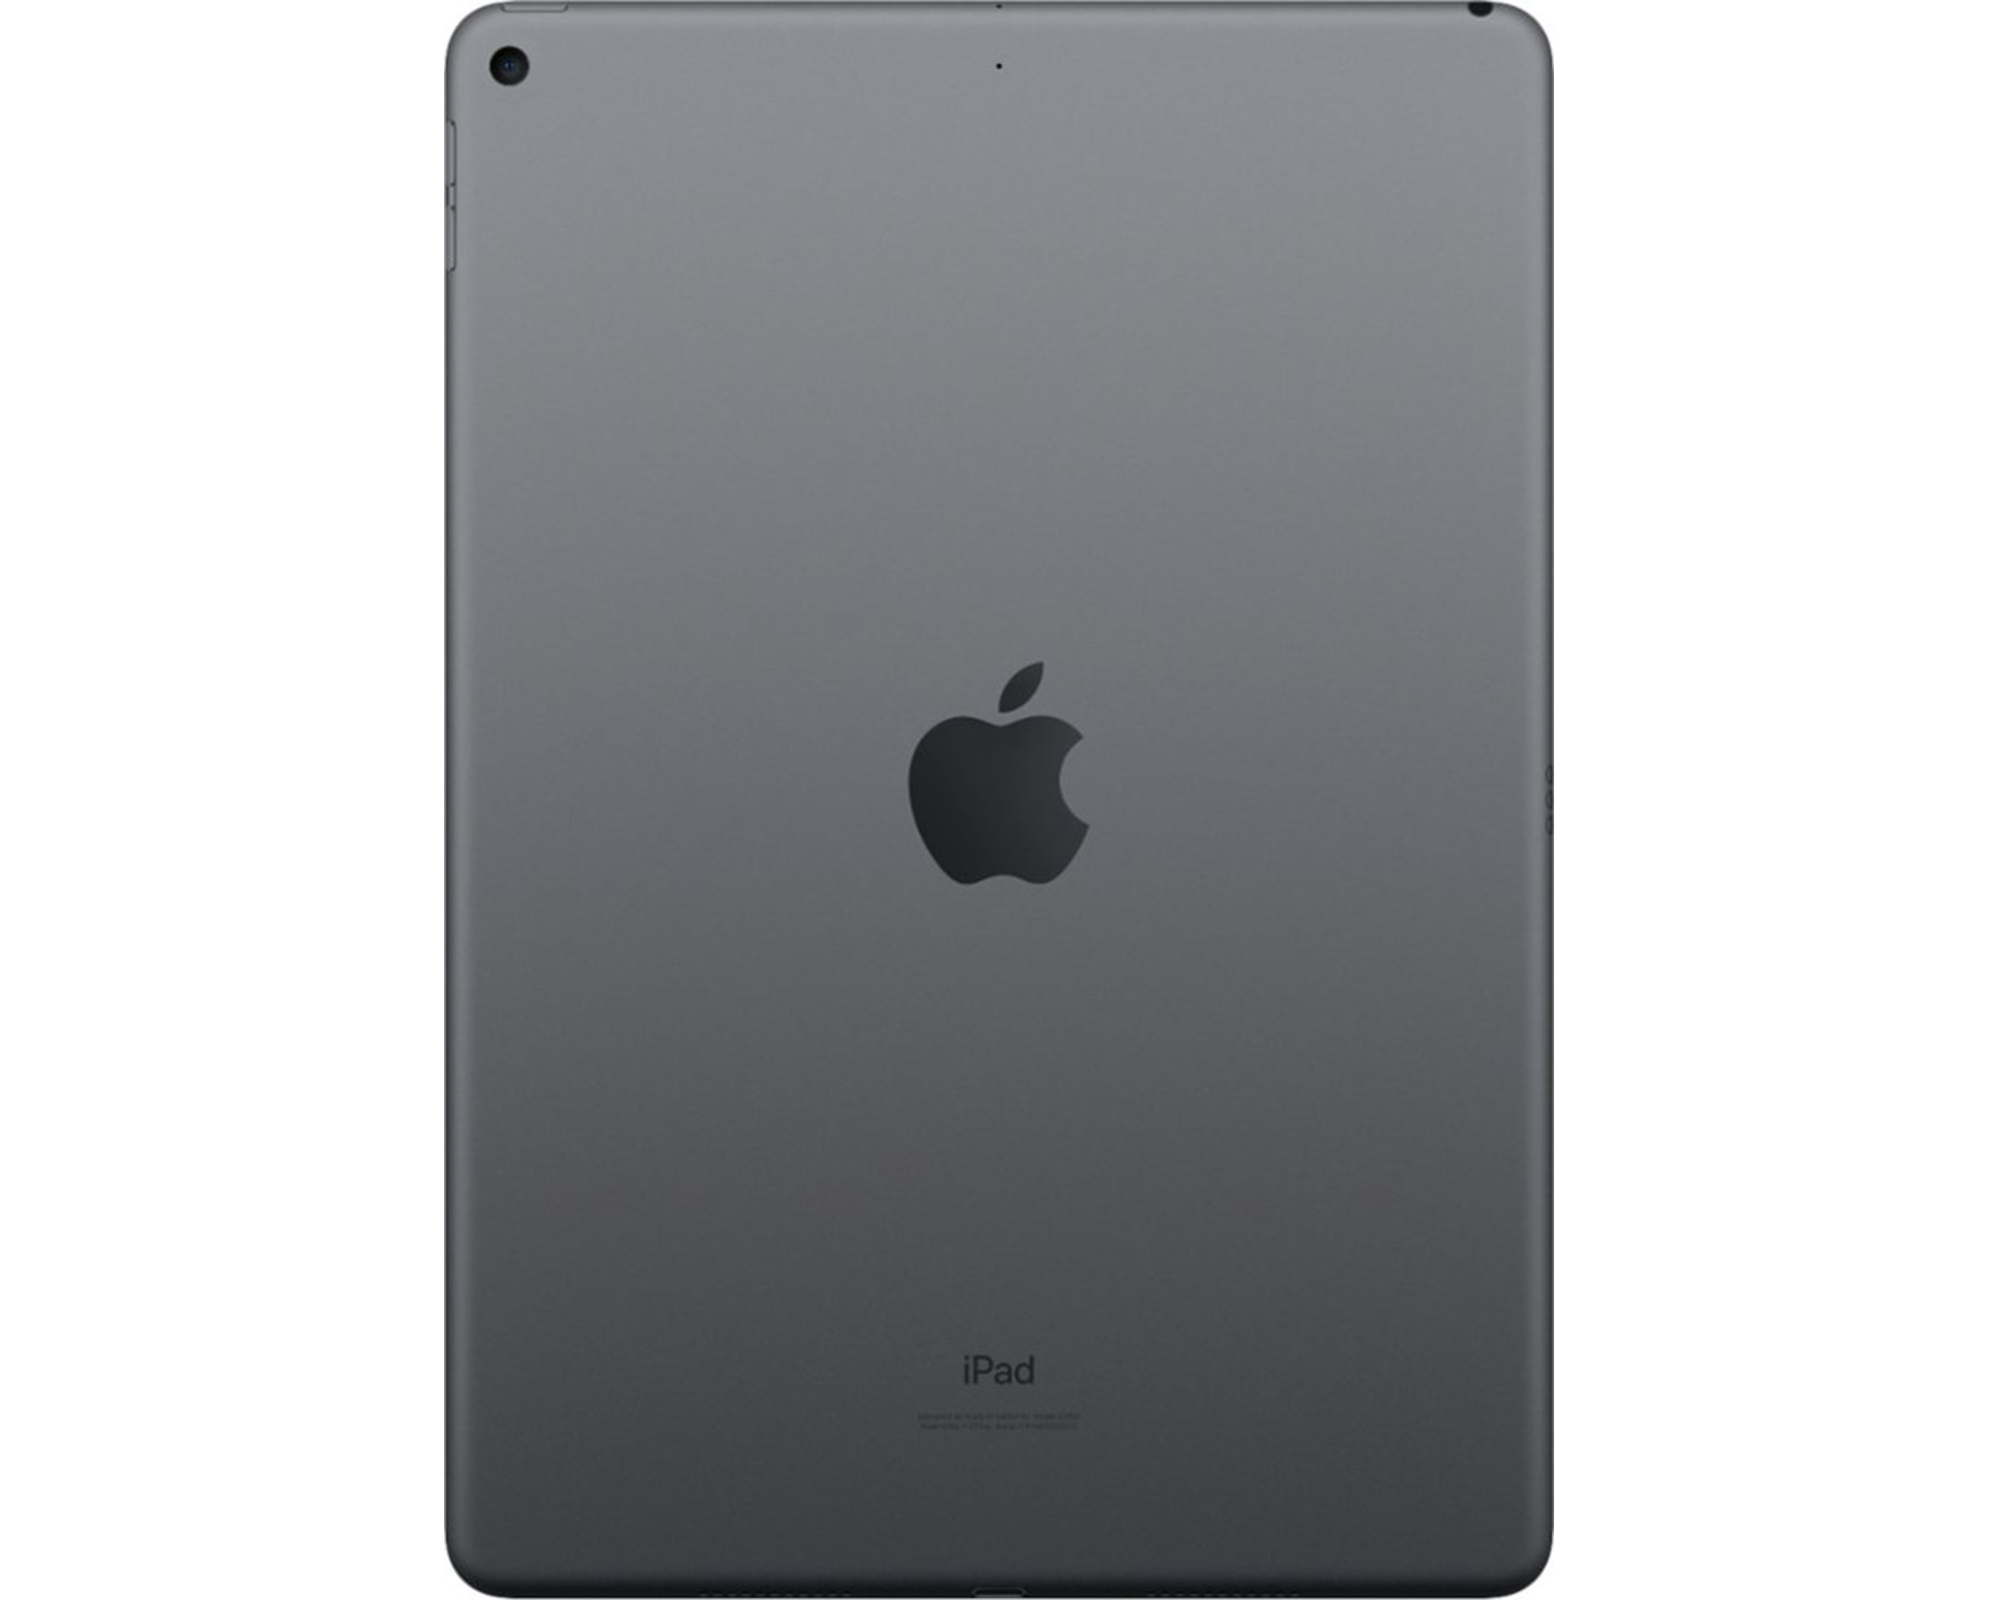 Restored Apple iPad Air 2 A1566 Wi-Fi (MGL12LL/A ) Space Gray - 16GB, 9.7 (Refurbished) - image 2 of 5